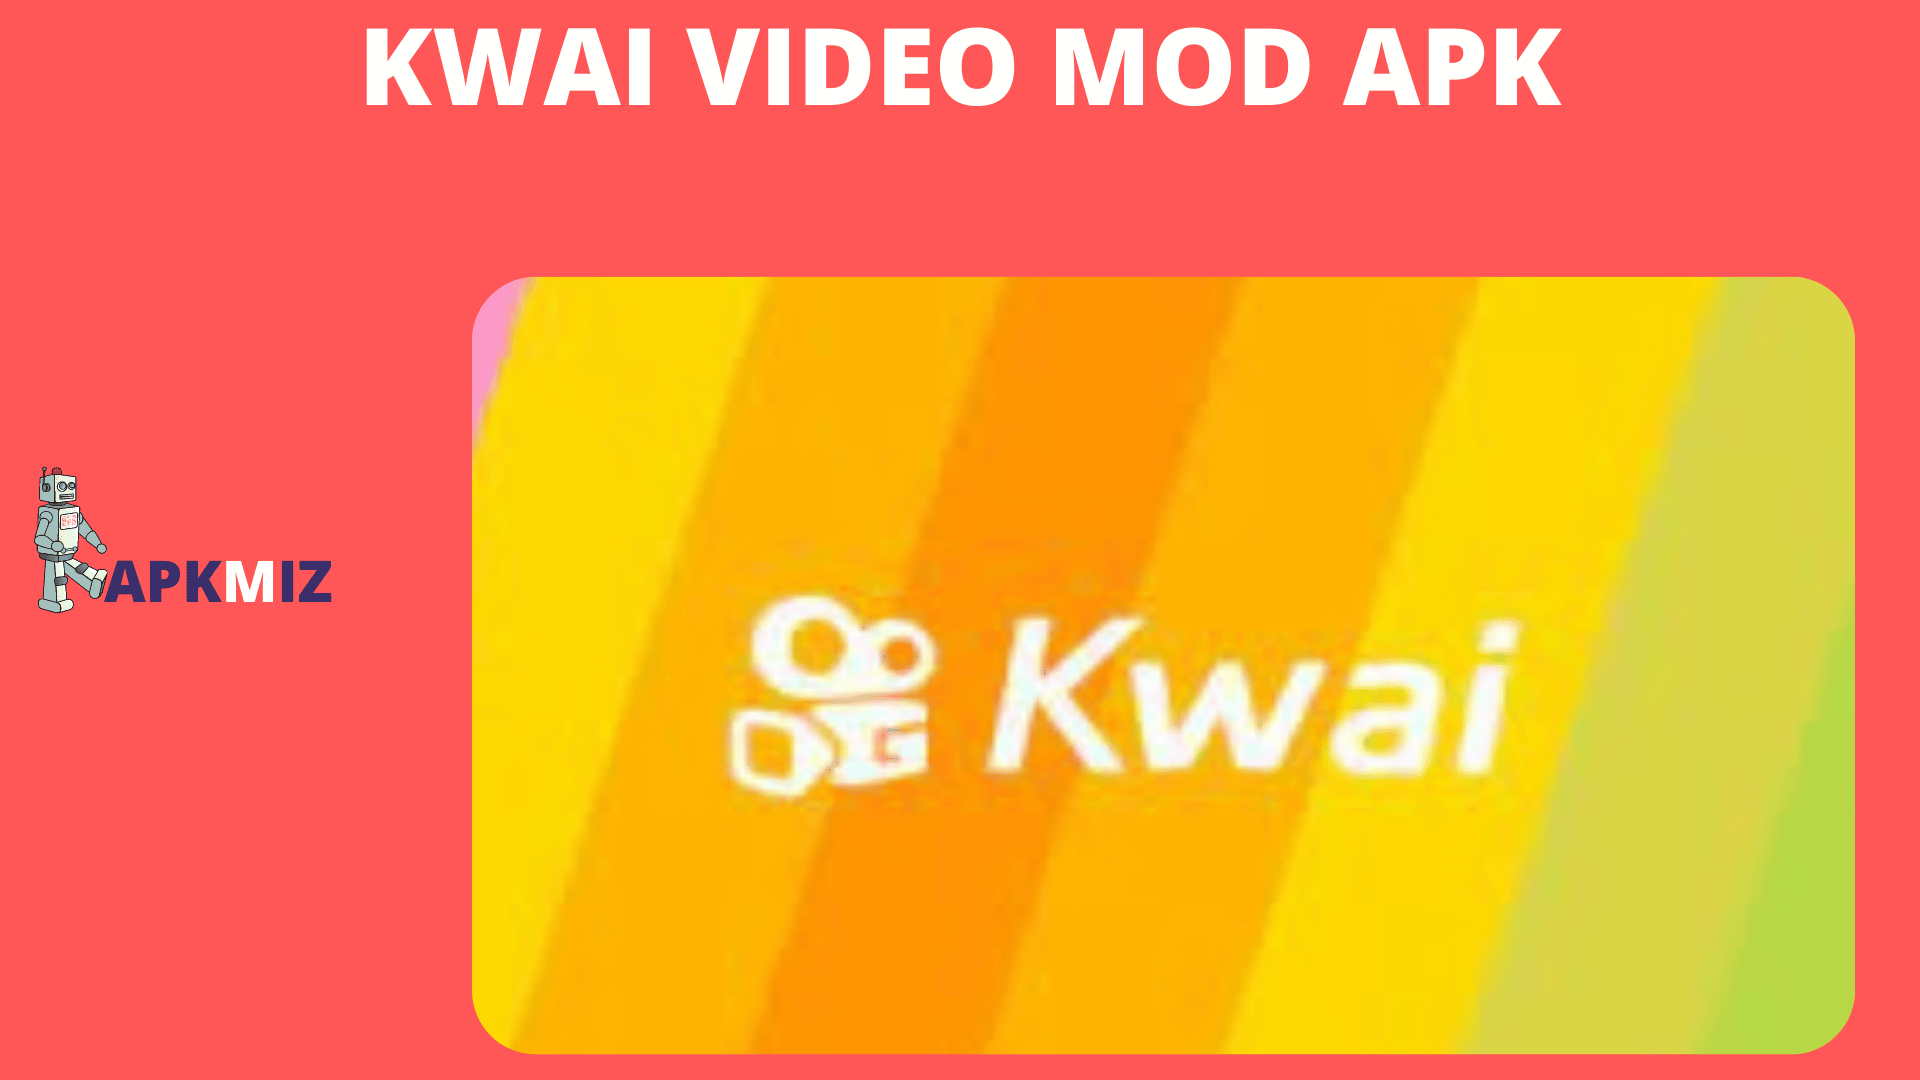 Kwai Video Mod Apk